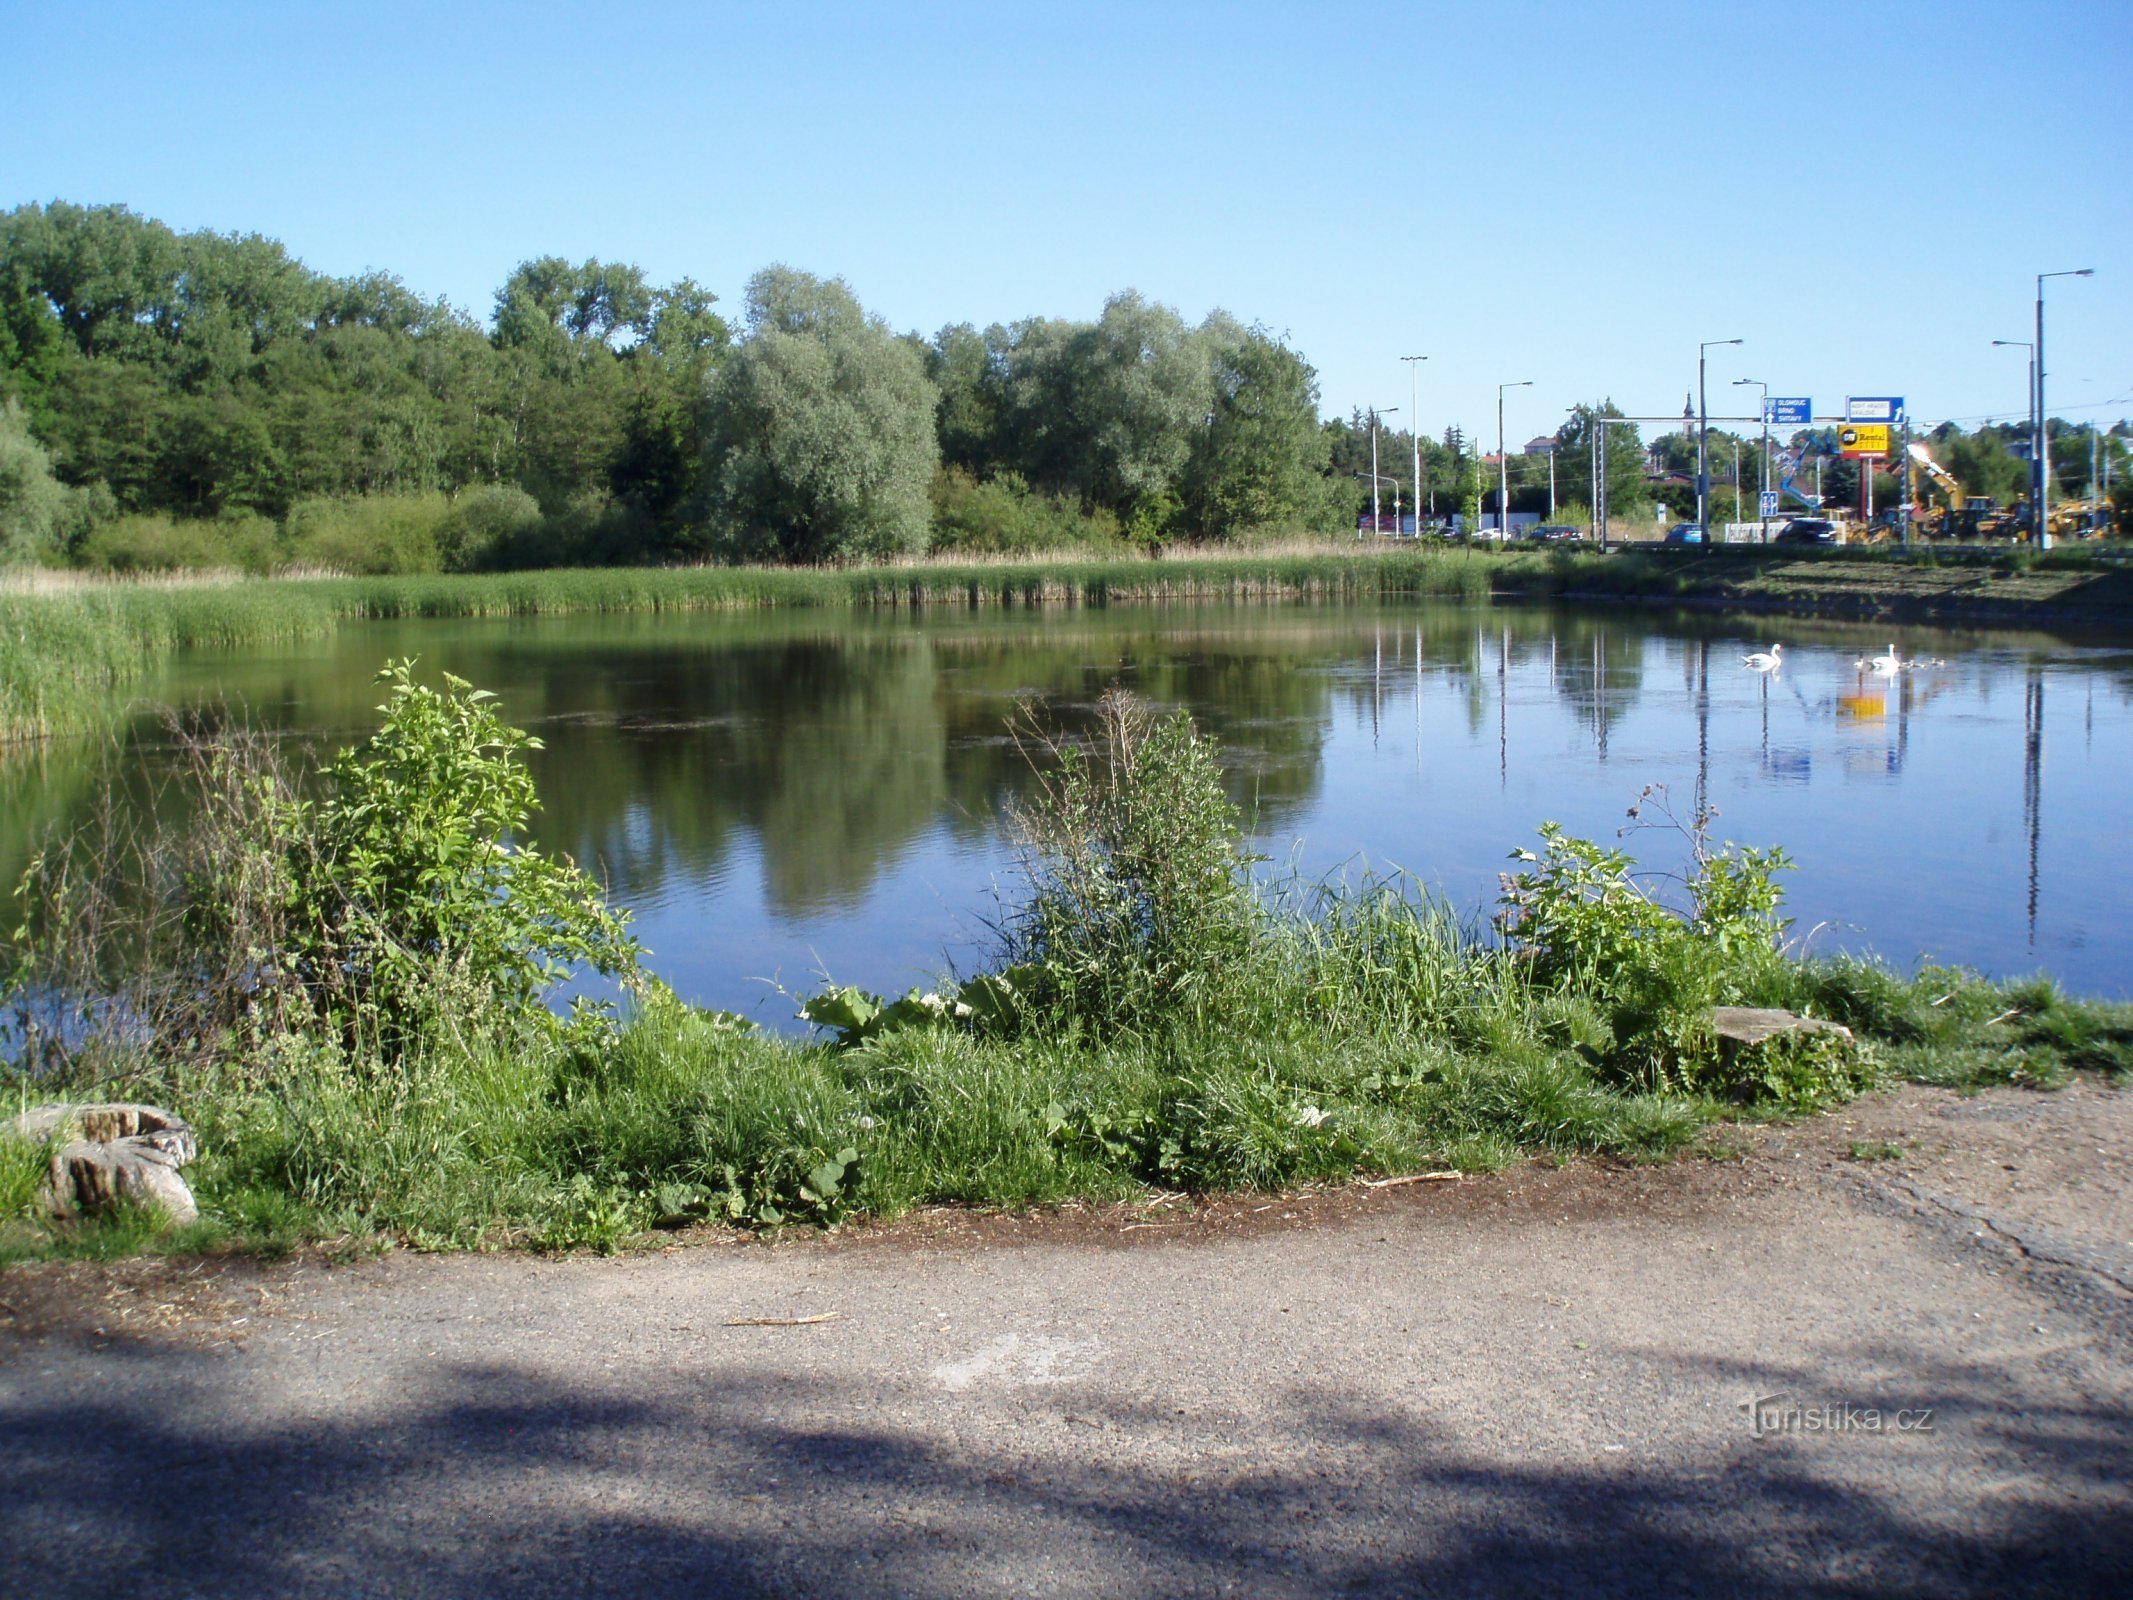 Plachta Pond (Hradec Králové, 25.5.2011)